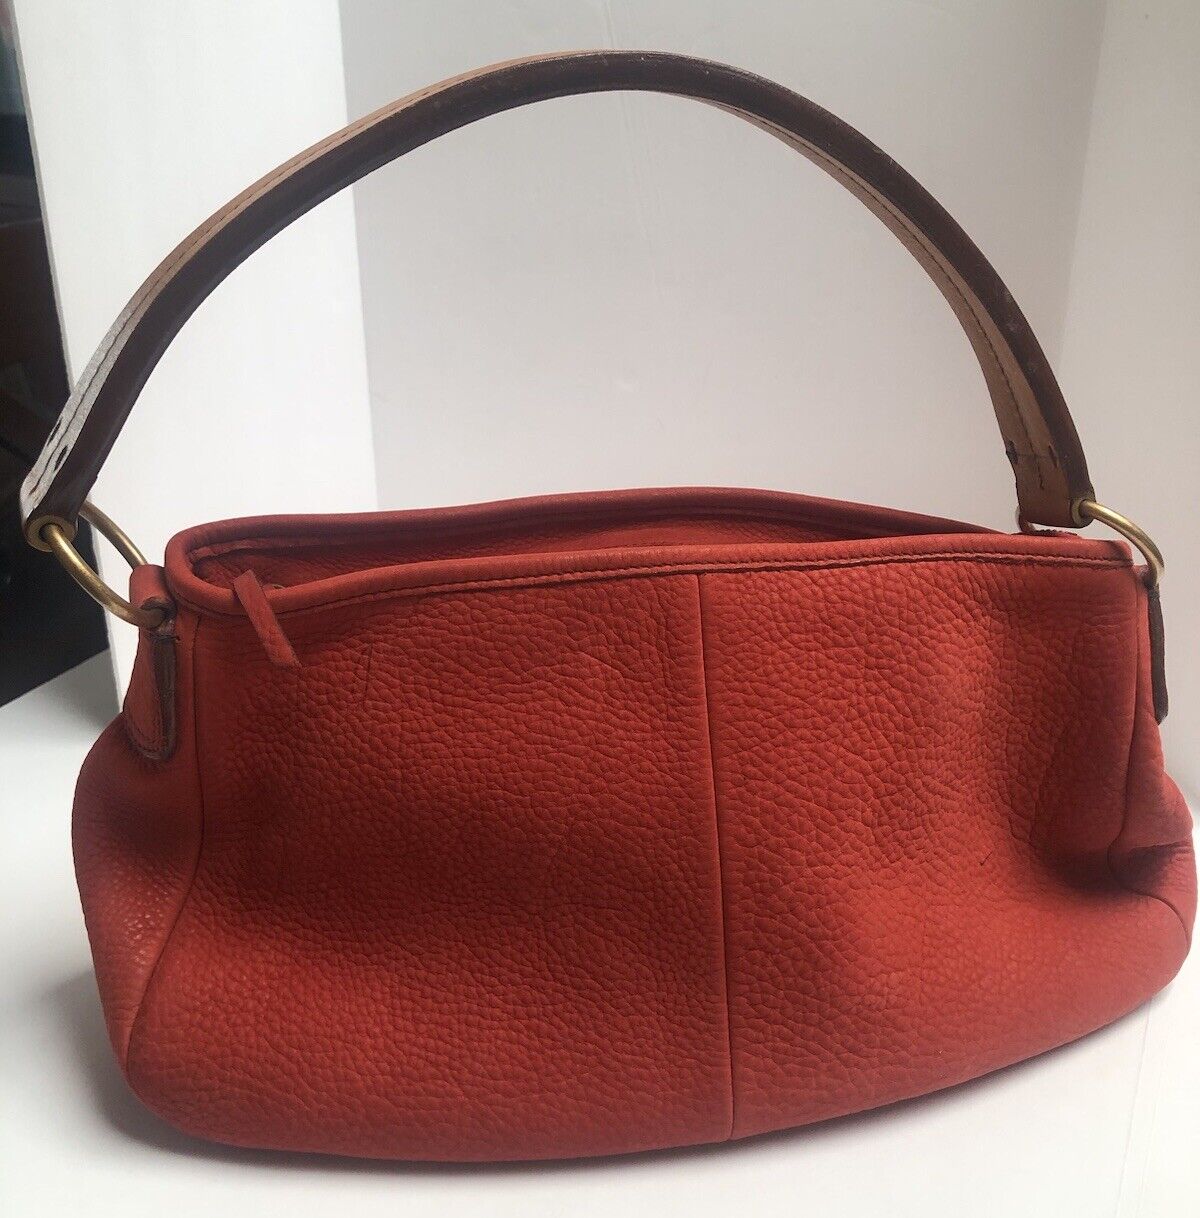 Miu Miu Bright Red Matte Pebble Leather Hobo Handbag 9” Strap